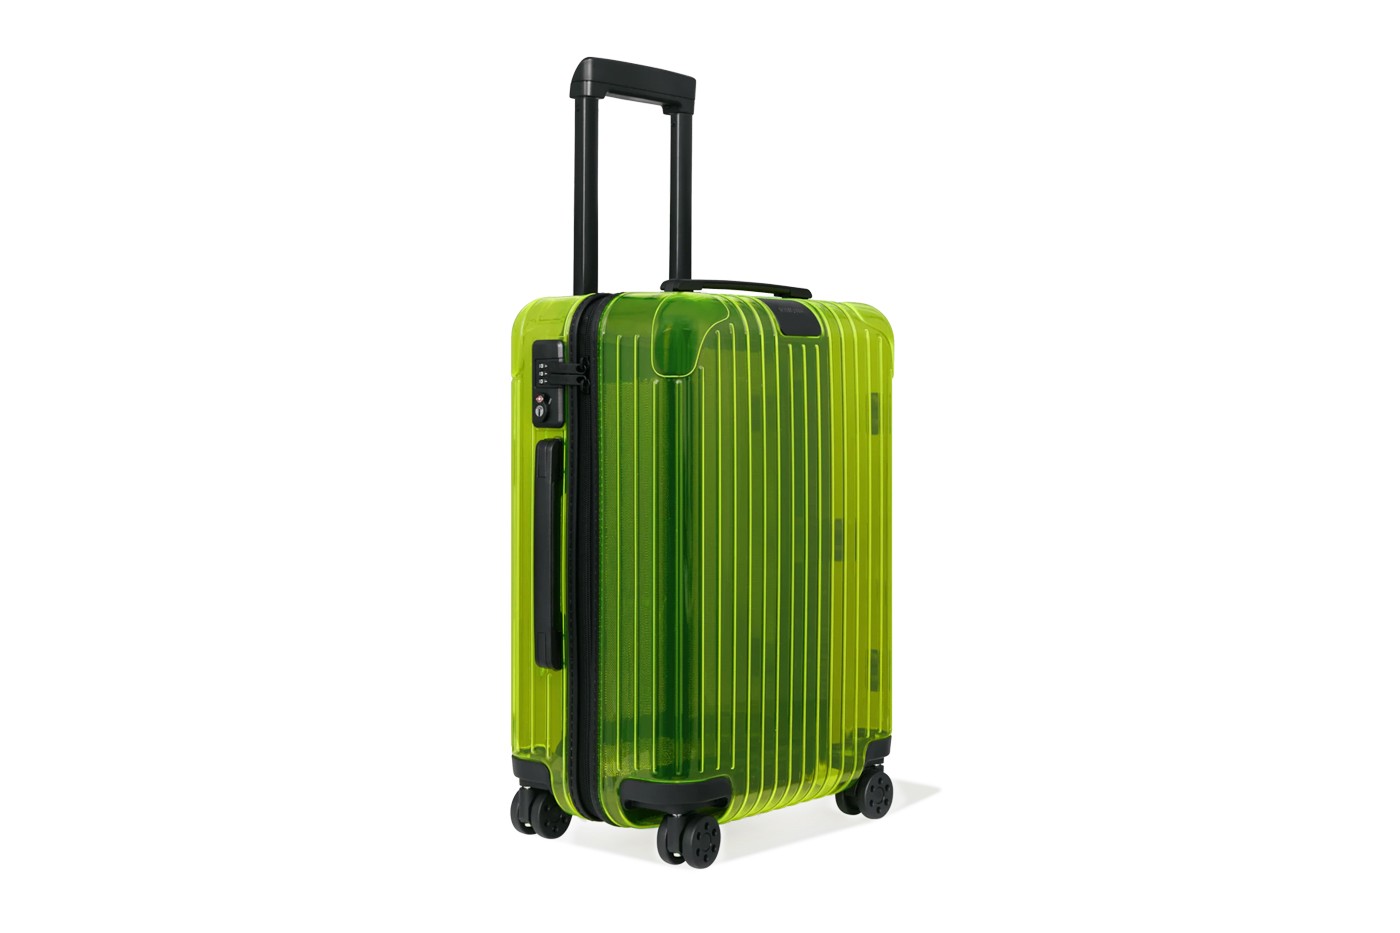 Rimowa выпустил летнюю коллекцию чемоданов в цветах лайма и фуксии (фото 1)